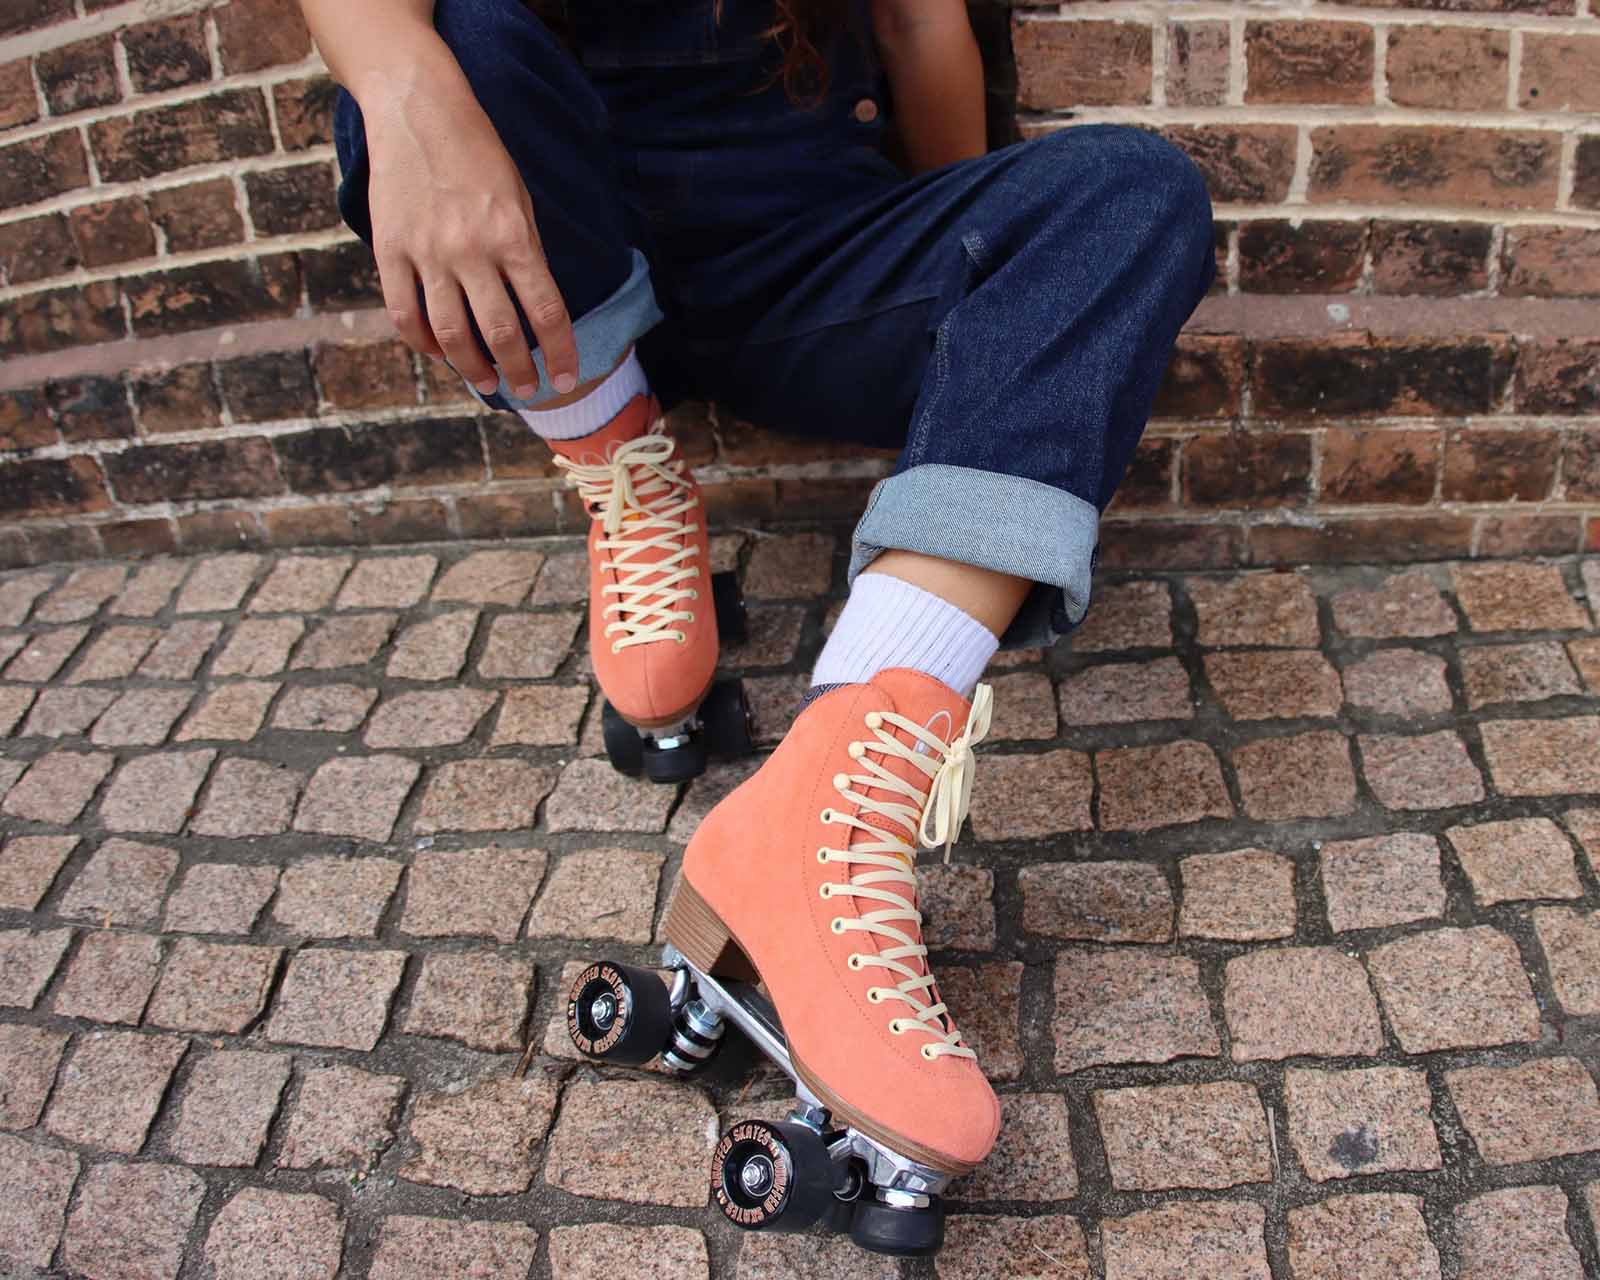 Chuffed Skates Wanderer - Peach Pink - 1 